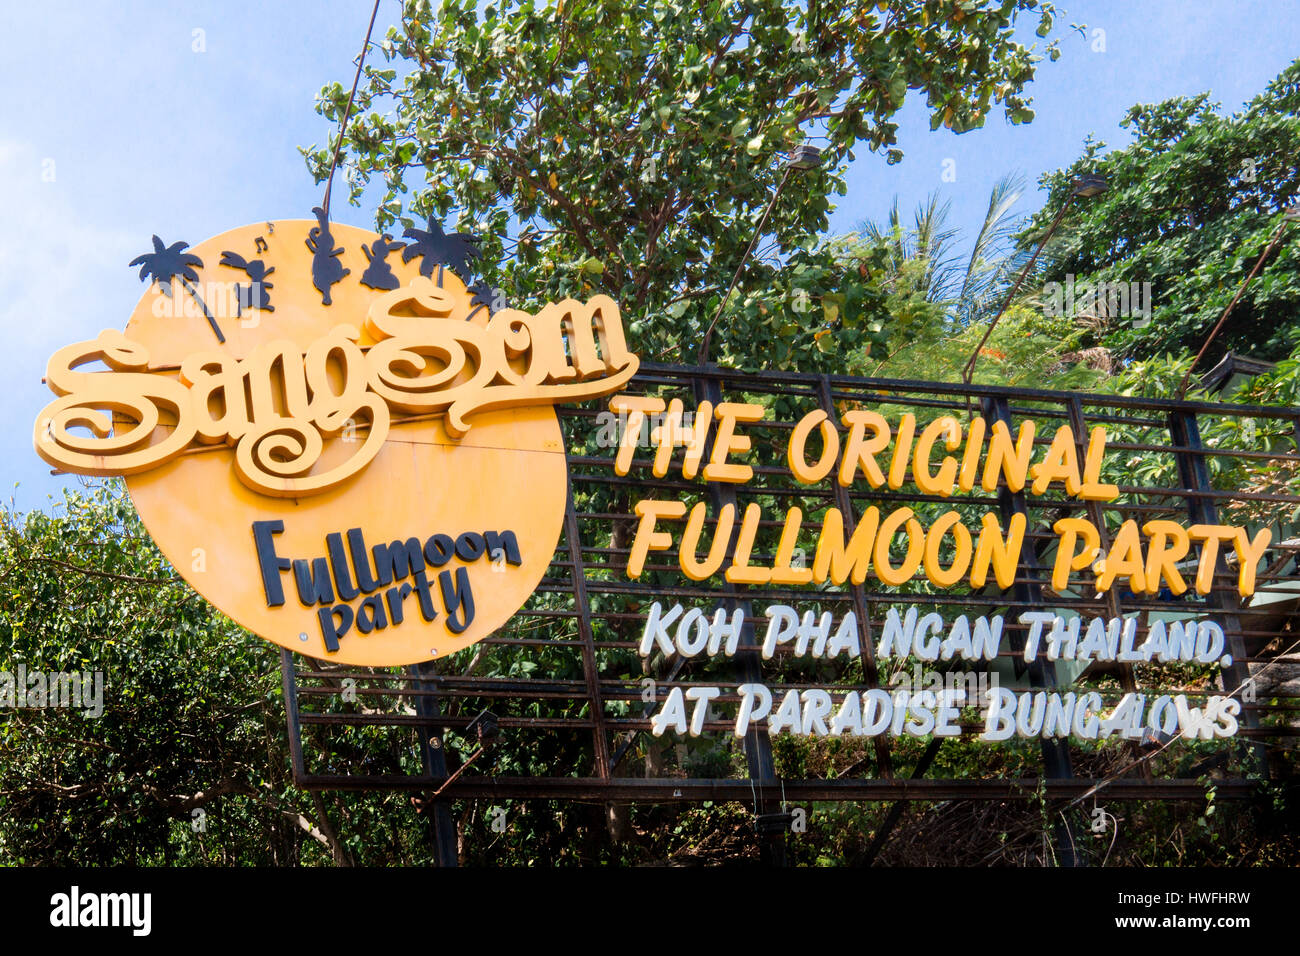 Fullmoon party sign on the beach, Haad Rin, Koh Pangan, May 04, Thailand Stock Photo